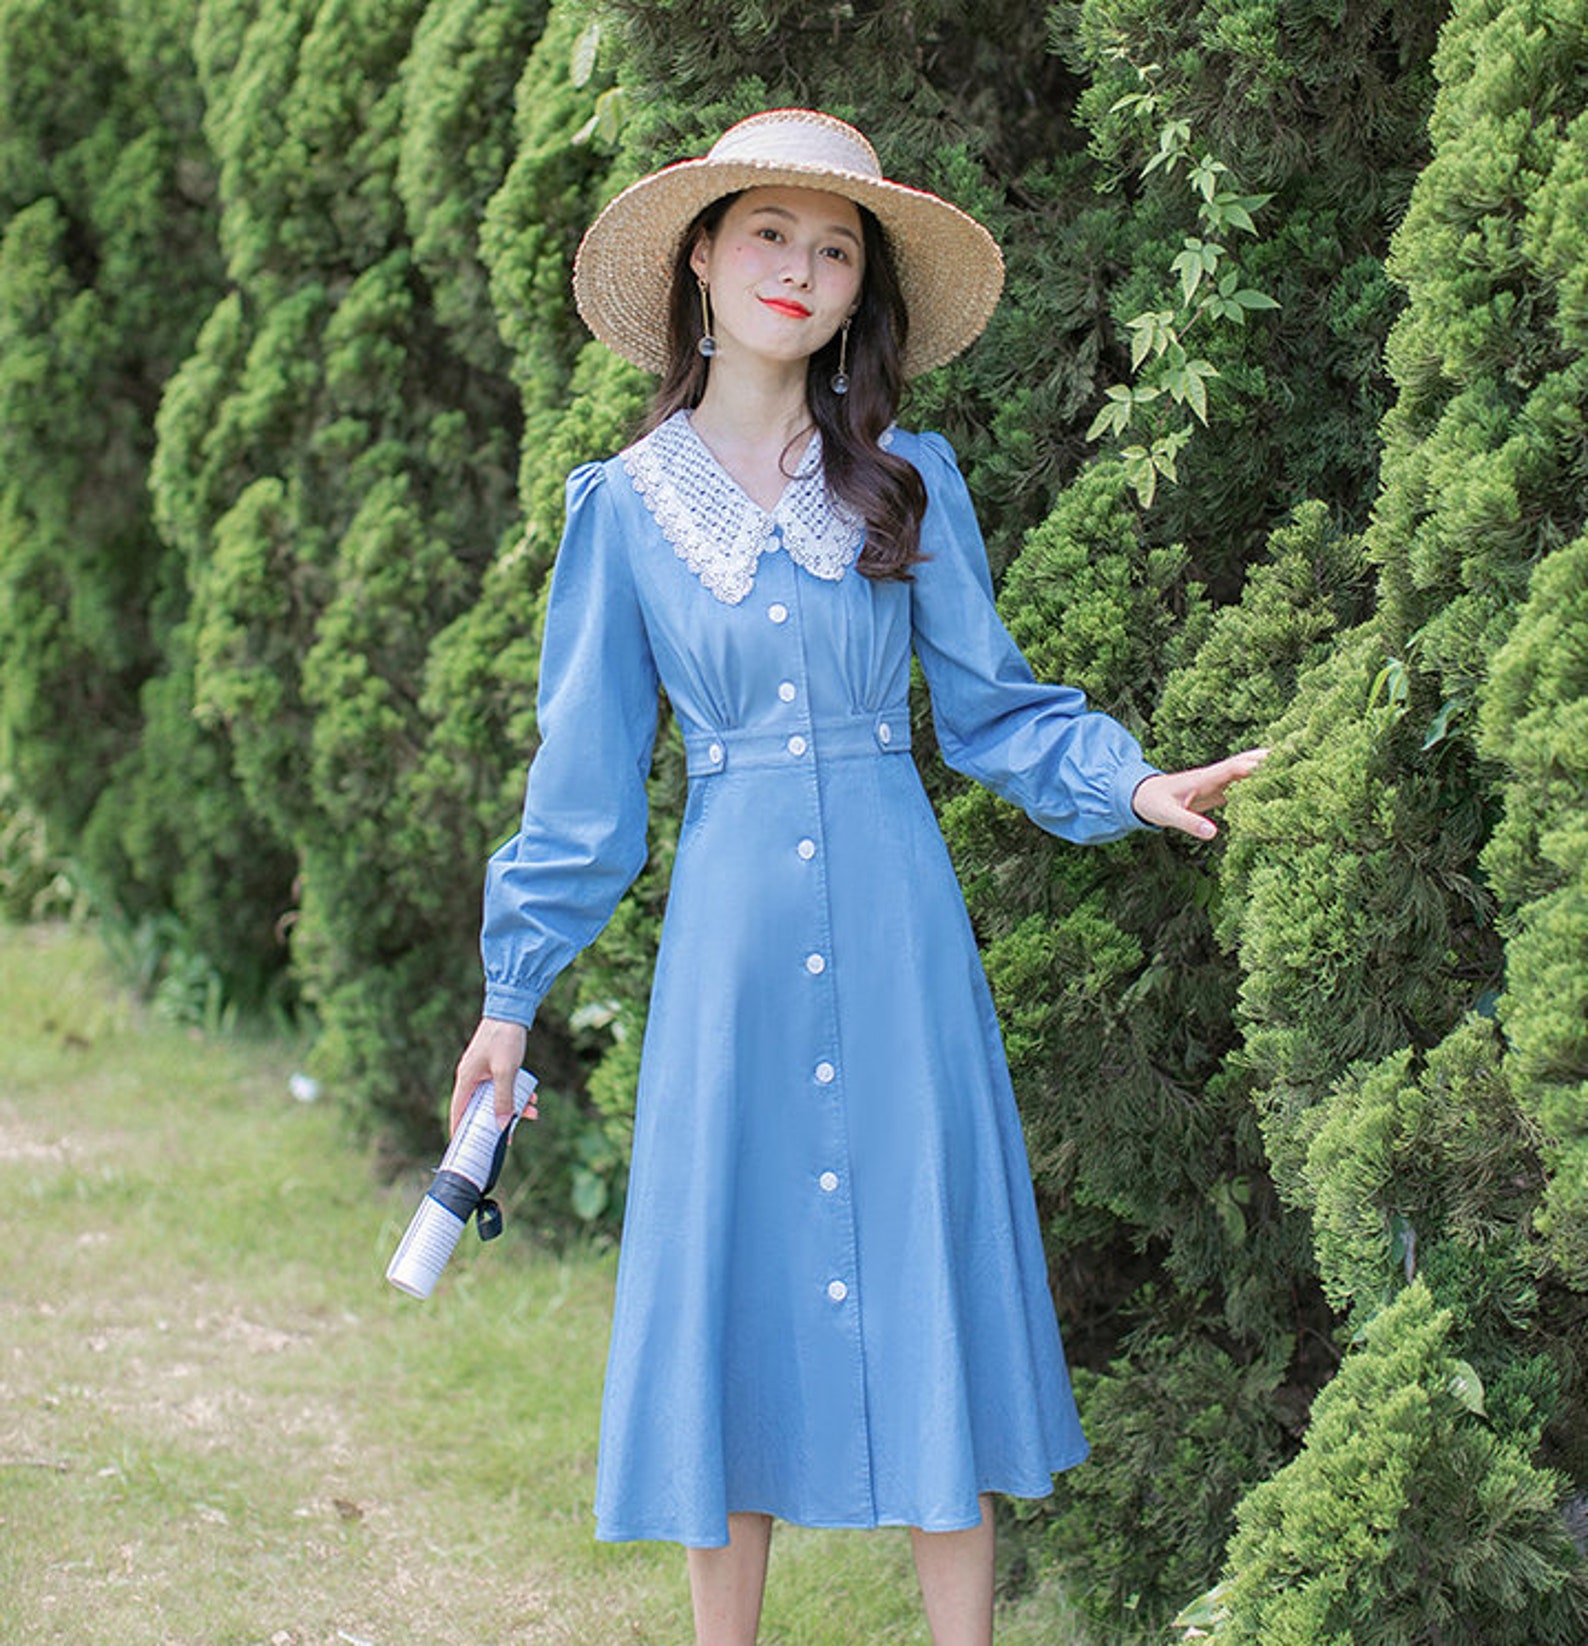 Cerulean Blue Vintage Cottagecore Style Midi Dress with Lace | Etsy